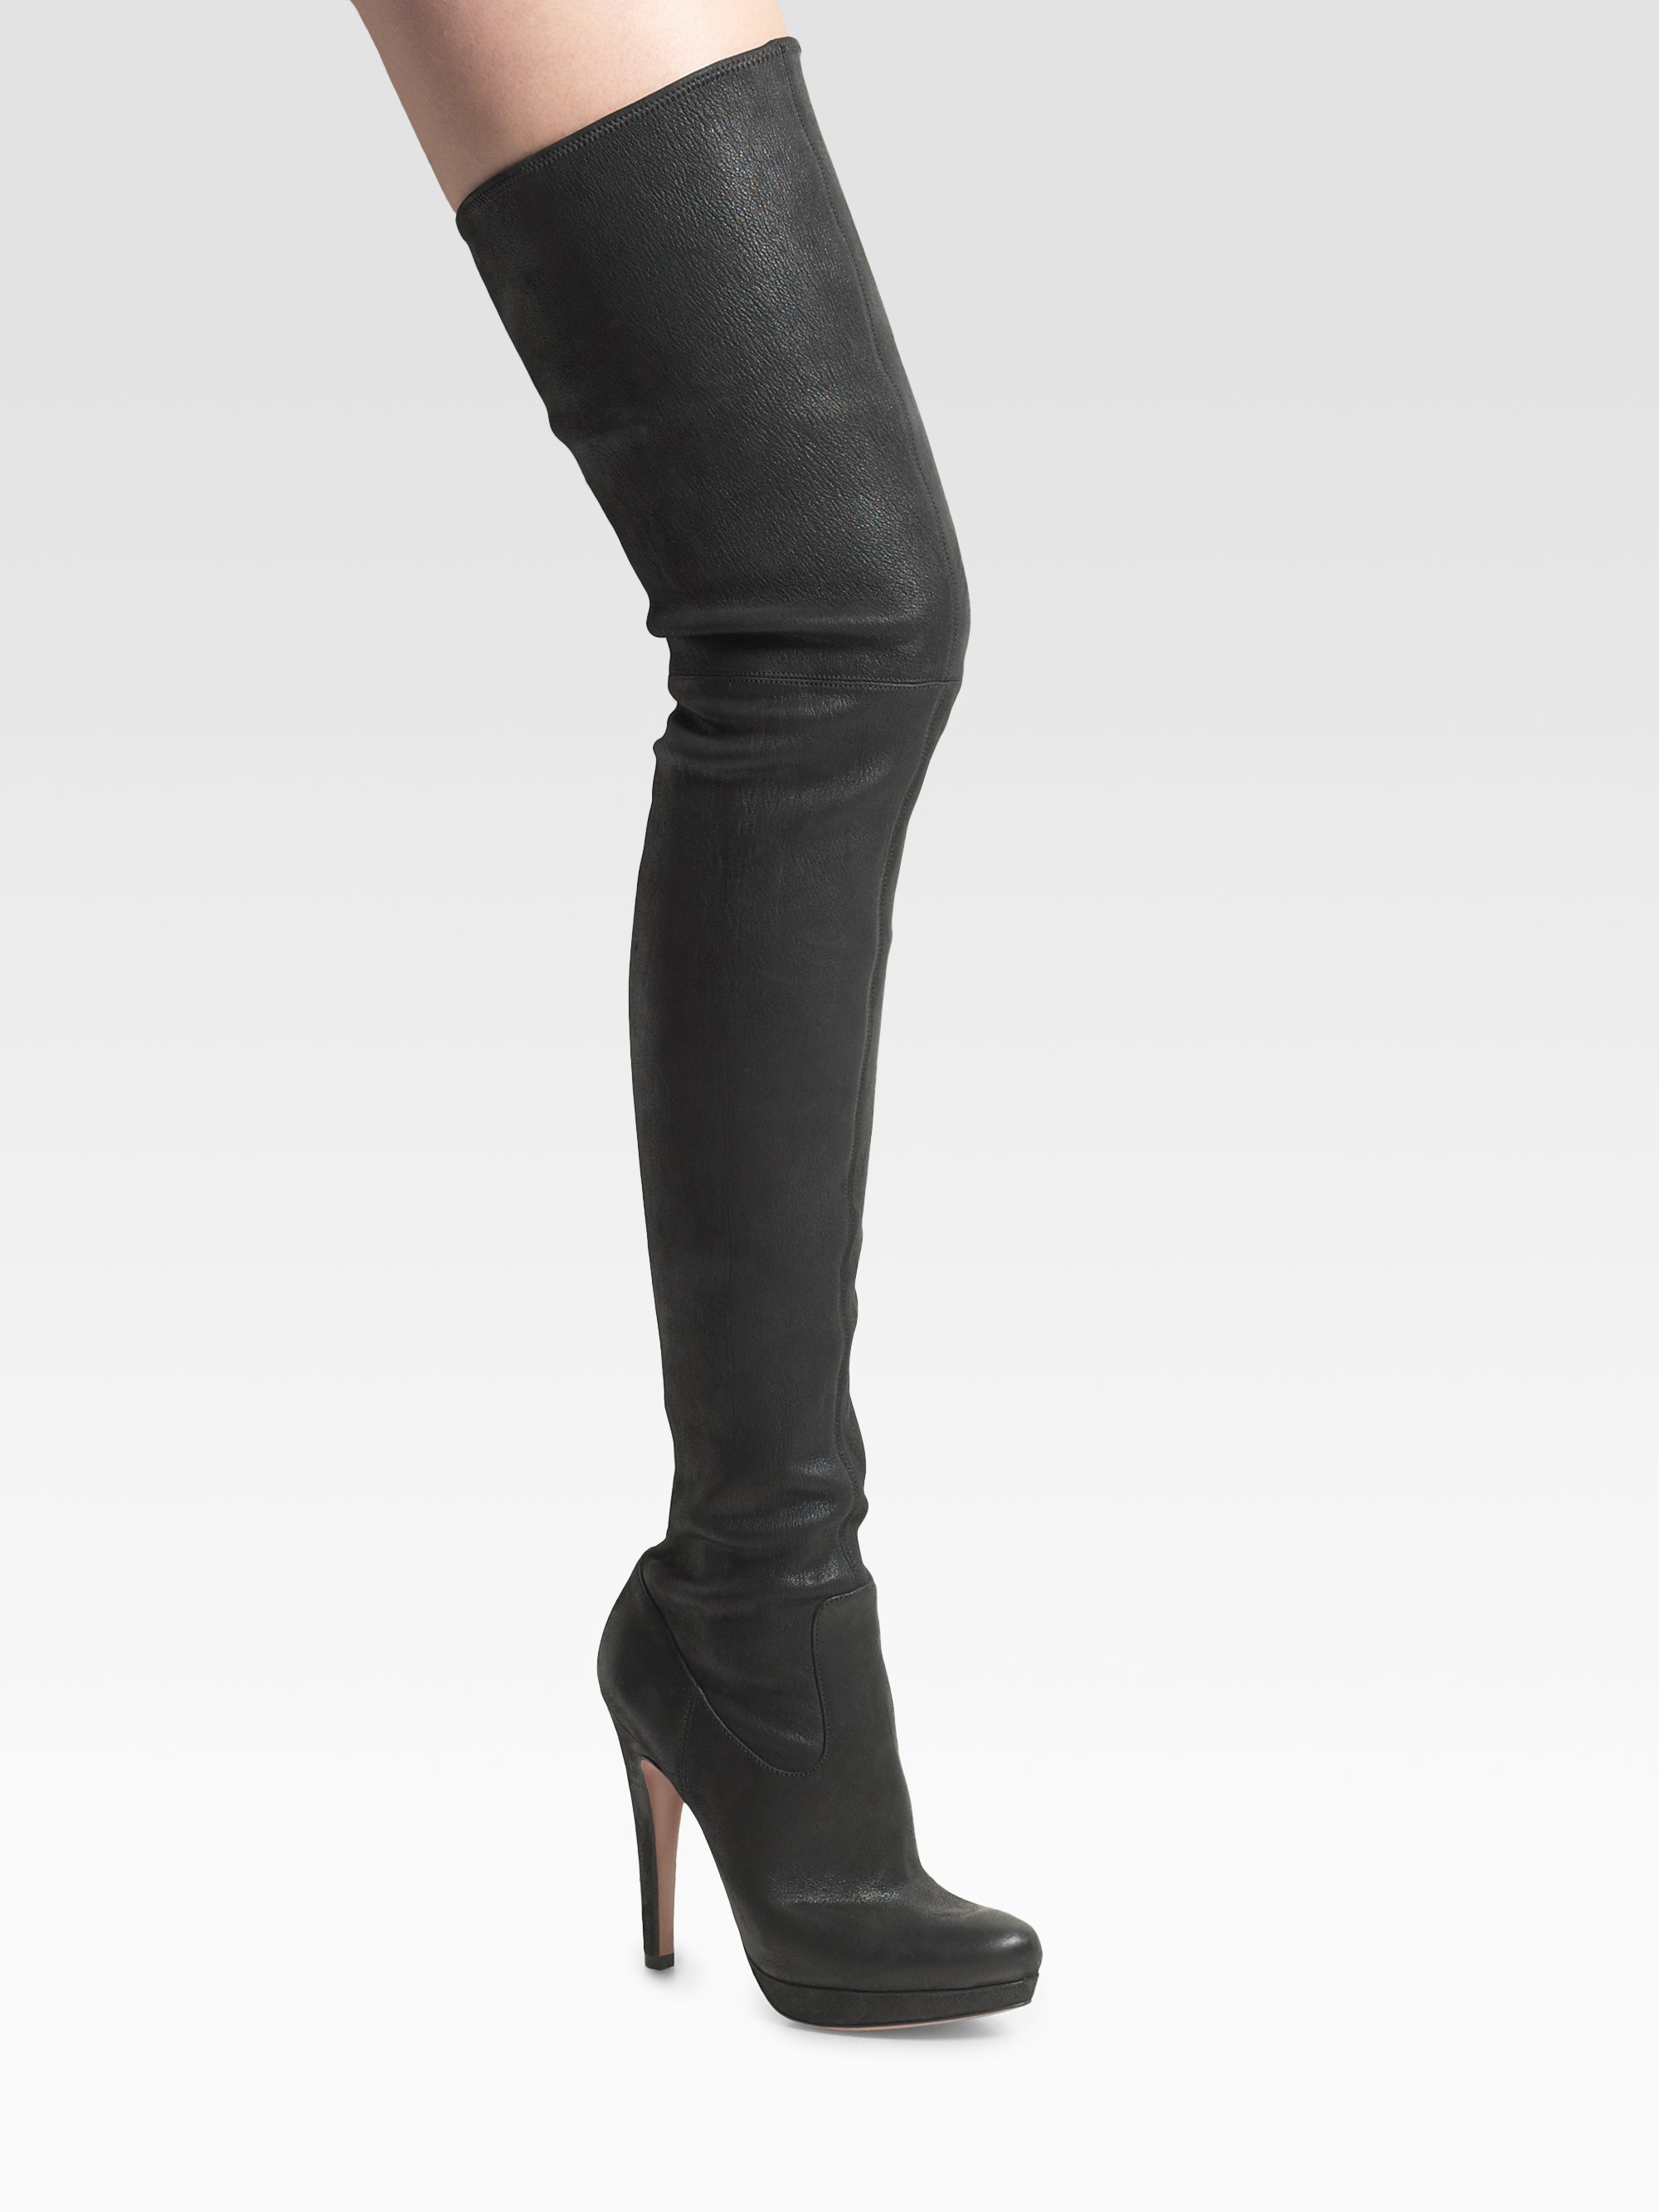 Prada Thigh-high Boots in Black - Lyst